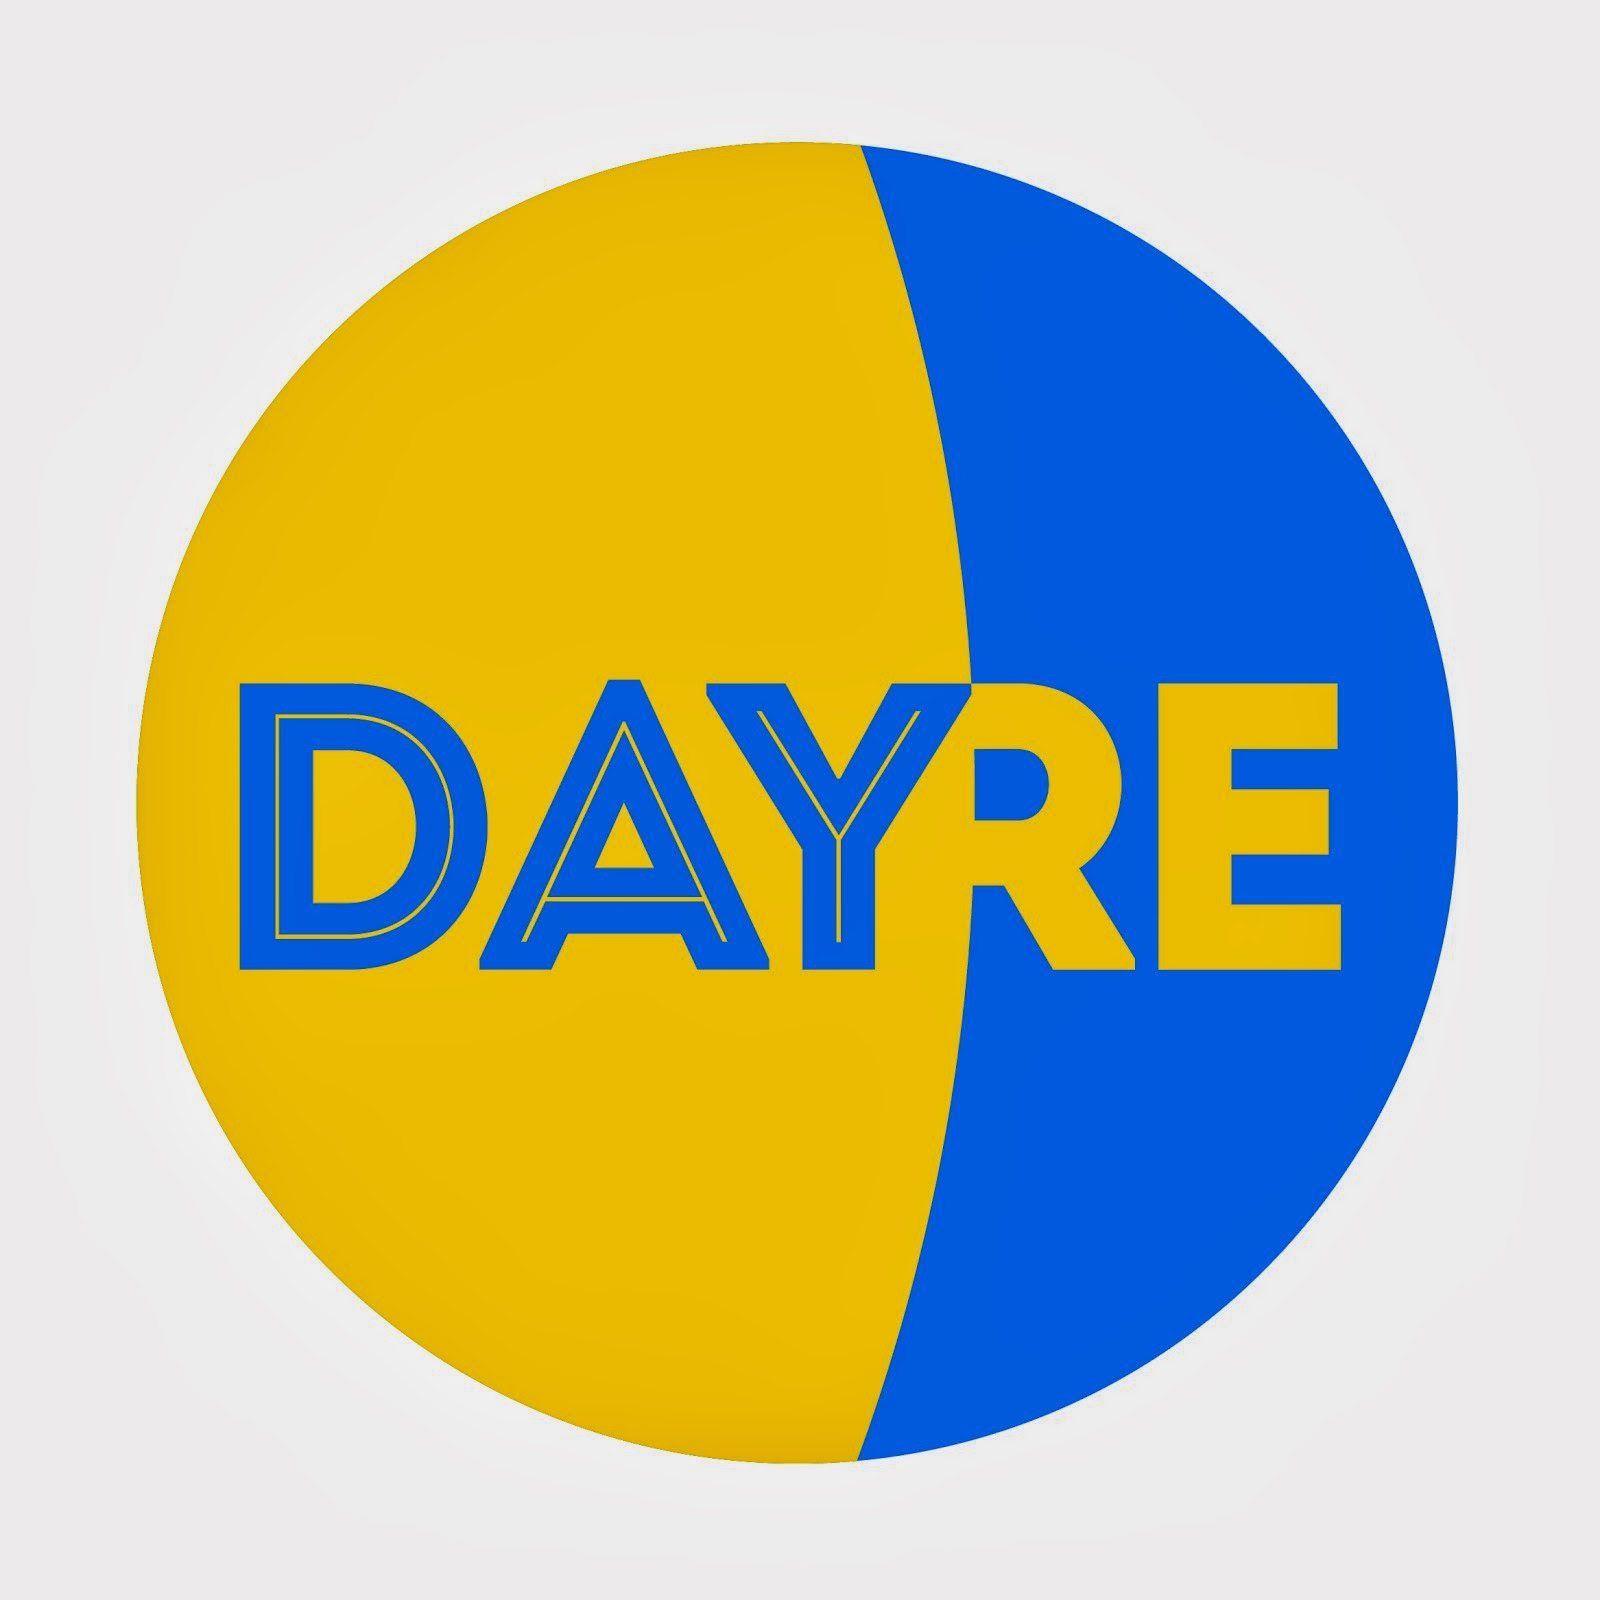 Dayre